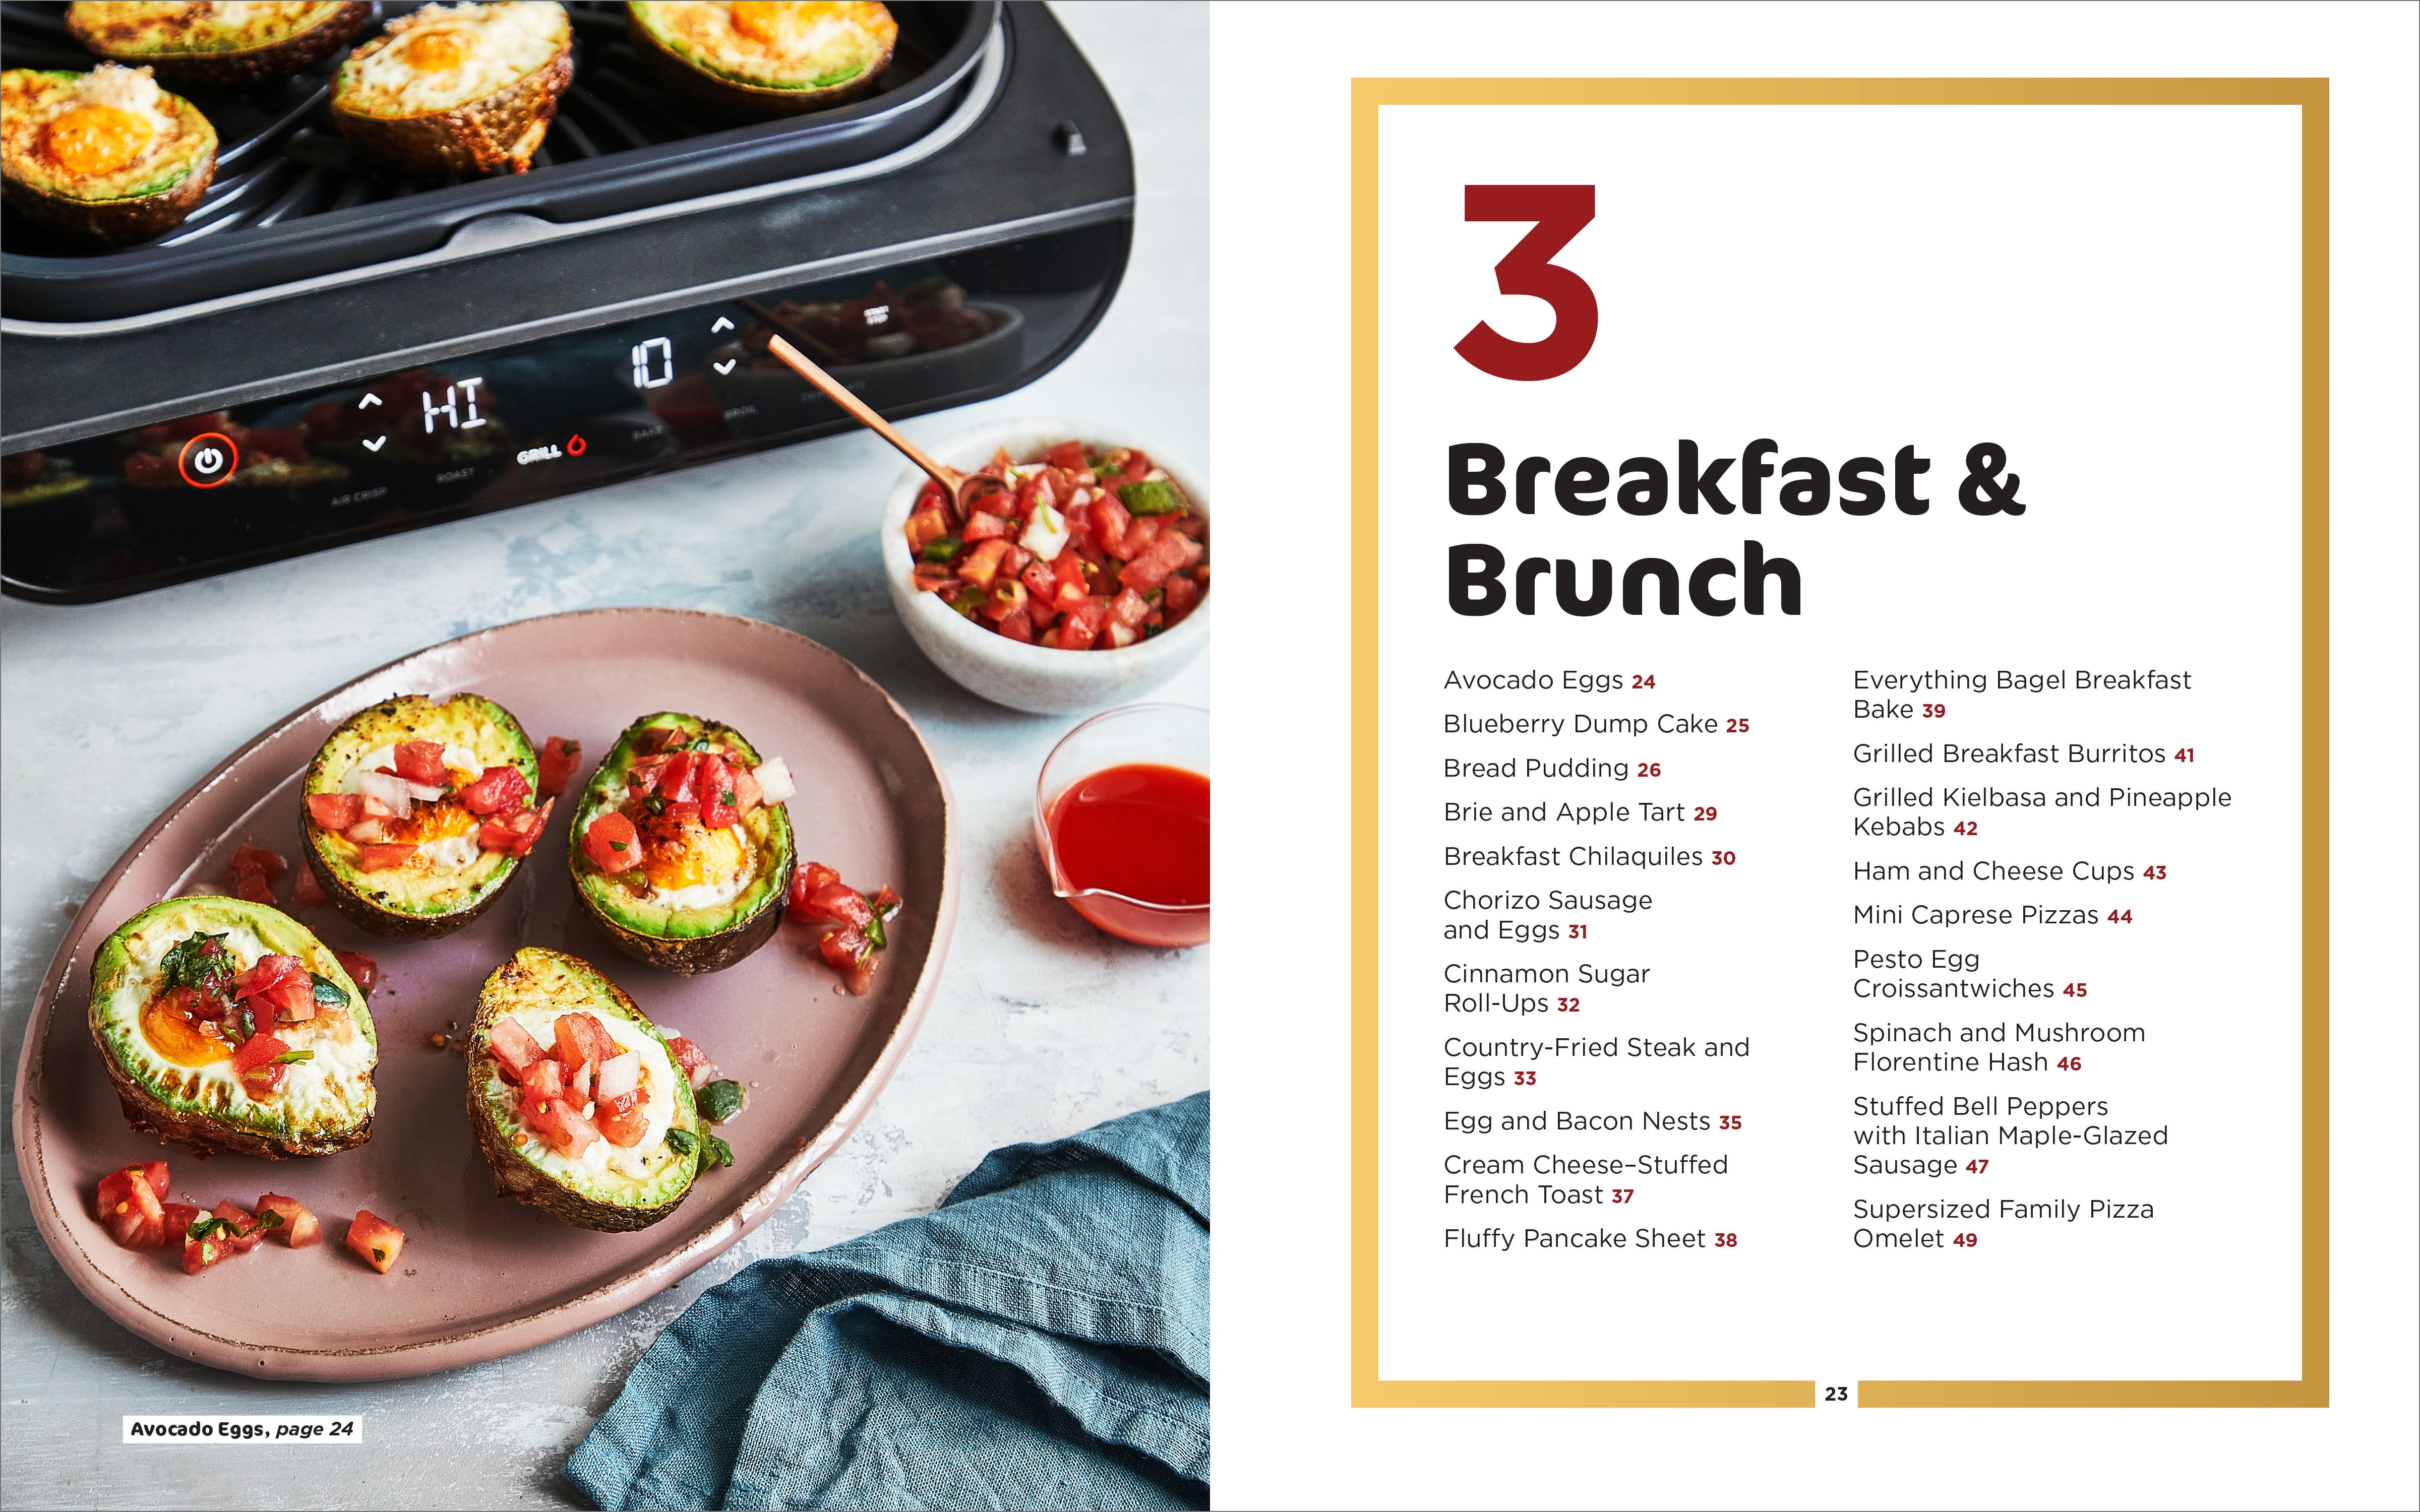 Ninja Foodi Smart XL Grill Cookbook 2021: Easy and Healthy Grill